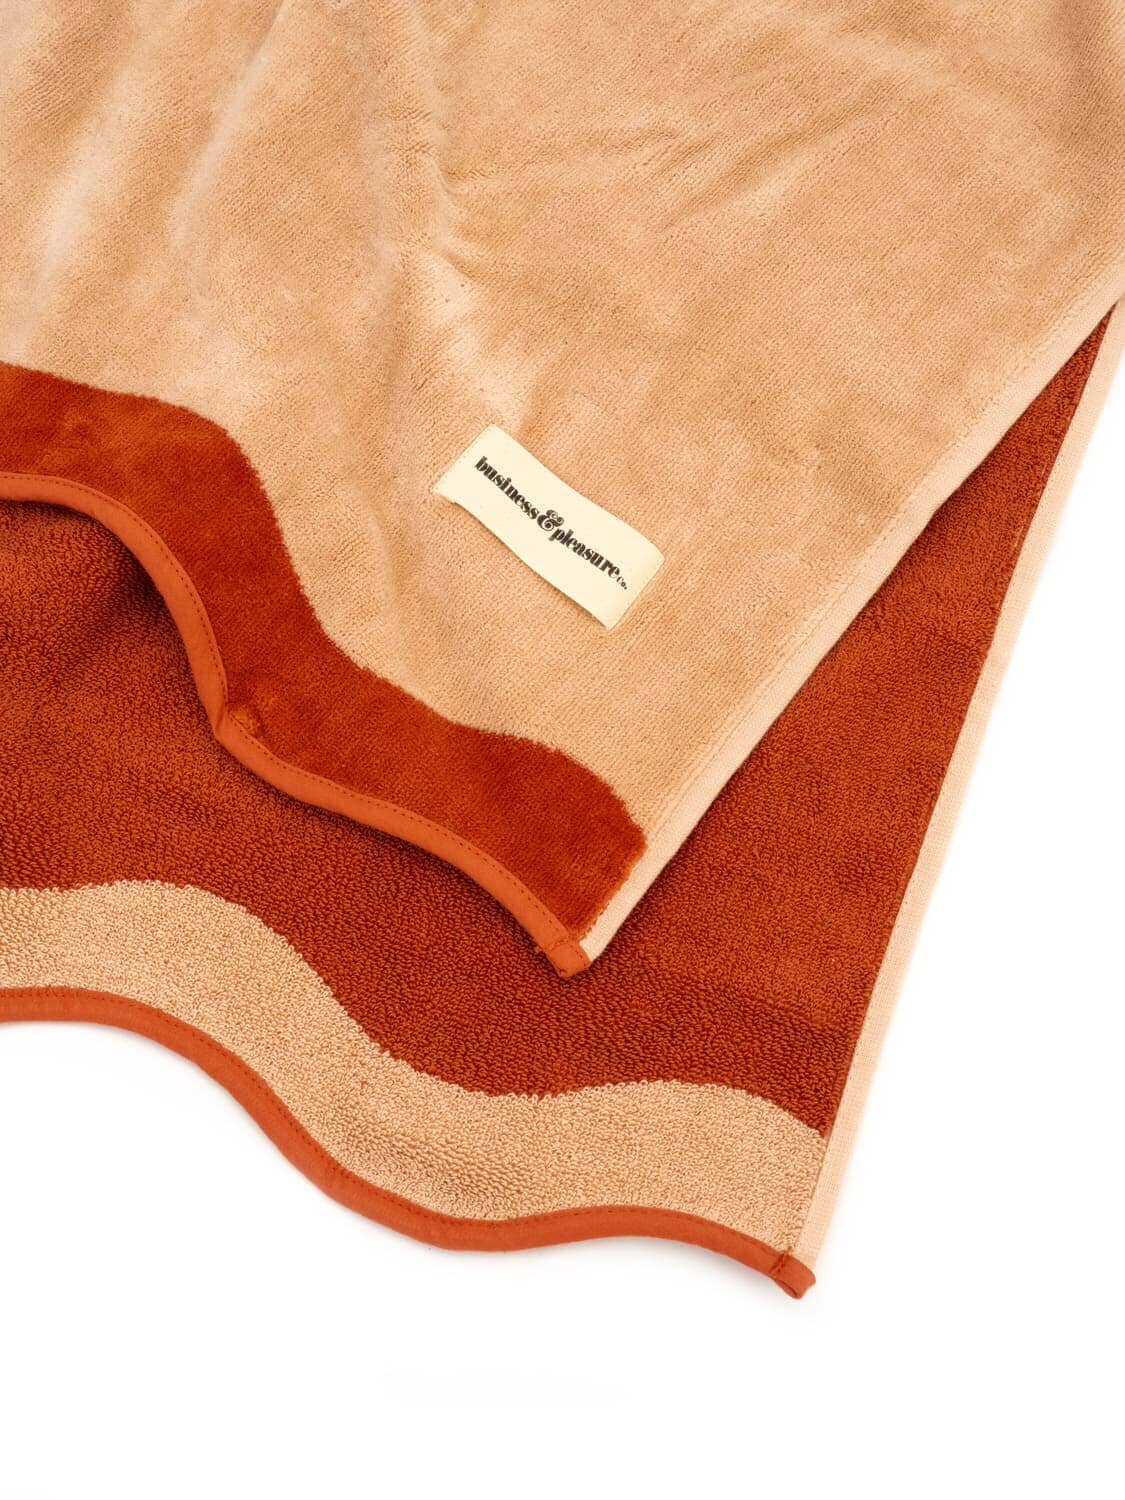 Studio image of riviera pink beach towel.